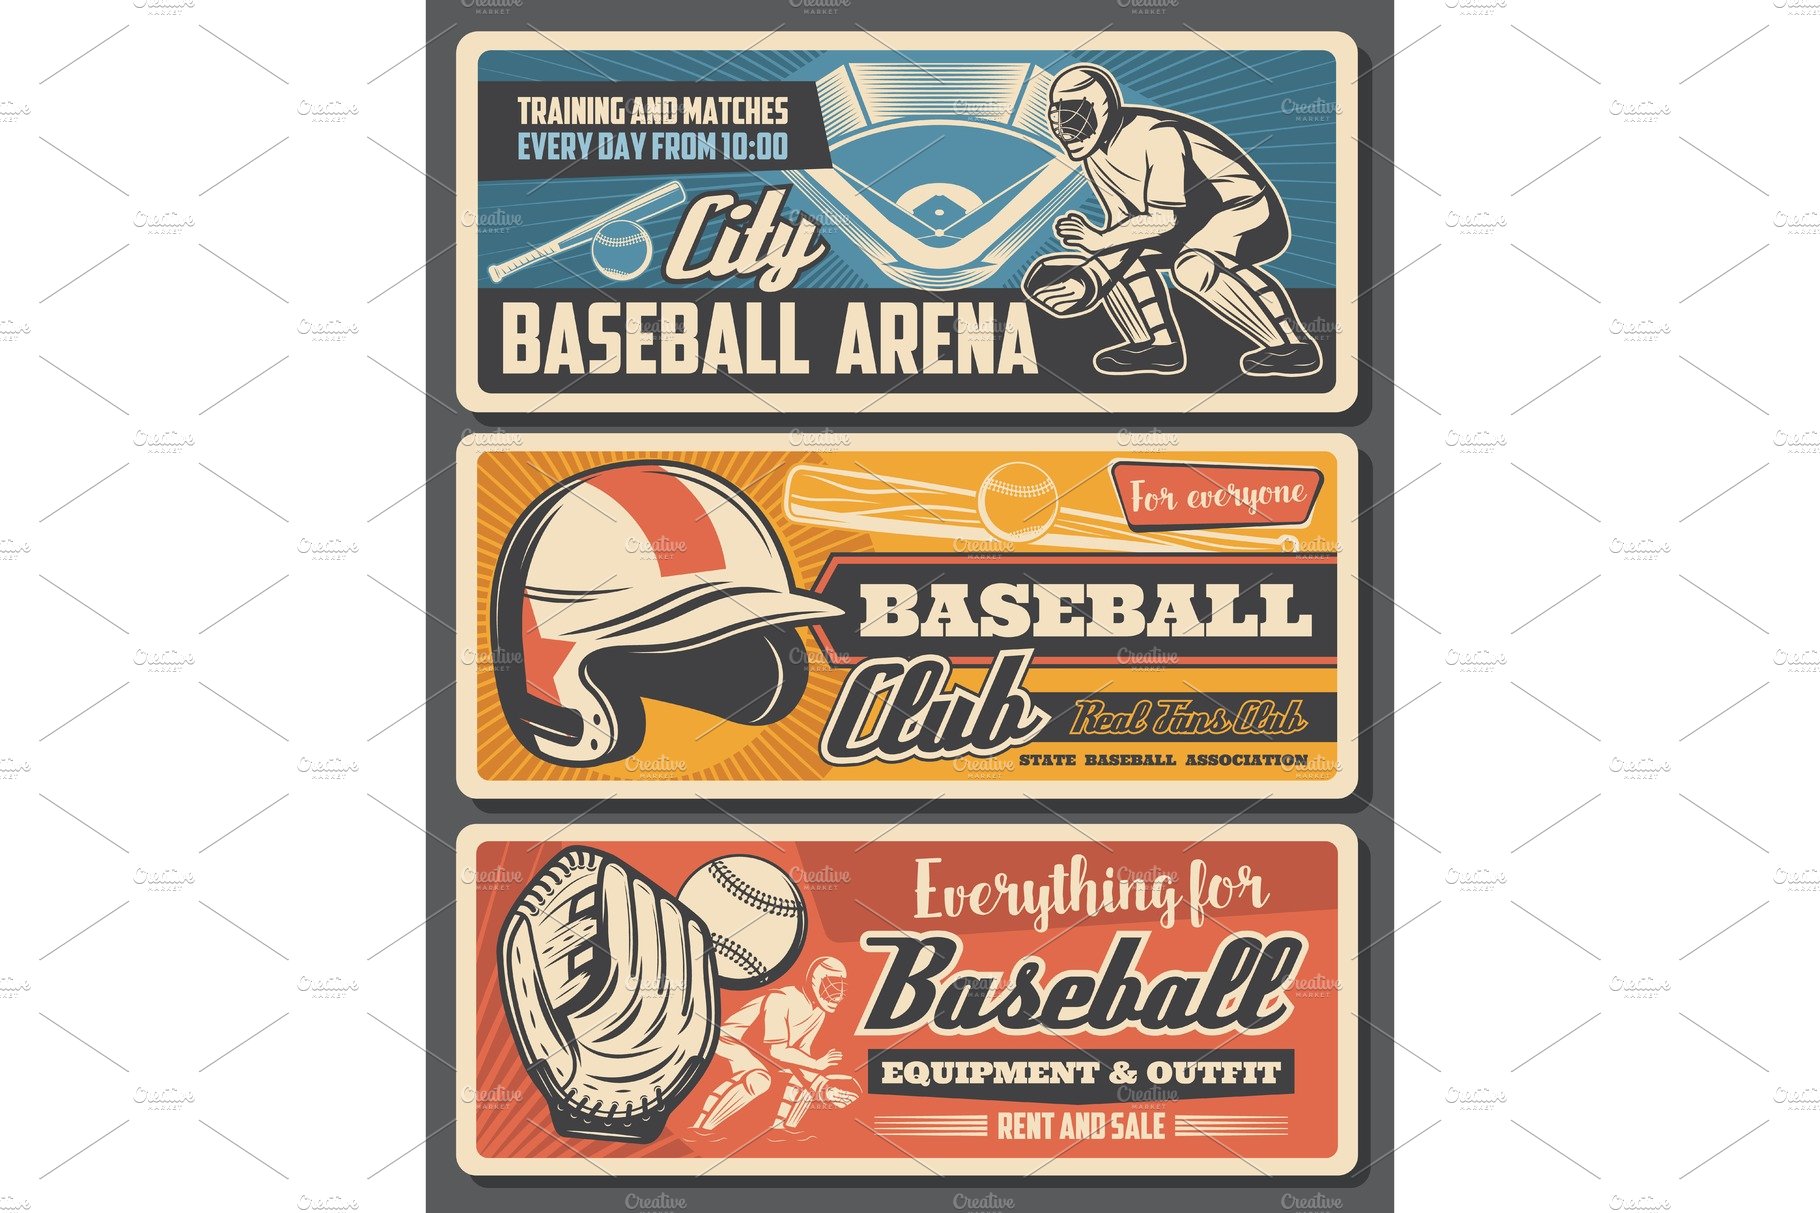 Baseball equipment, players cover image.